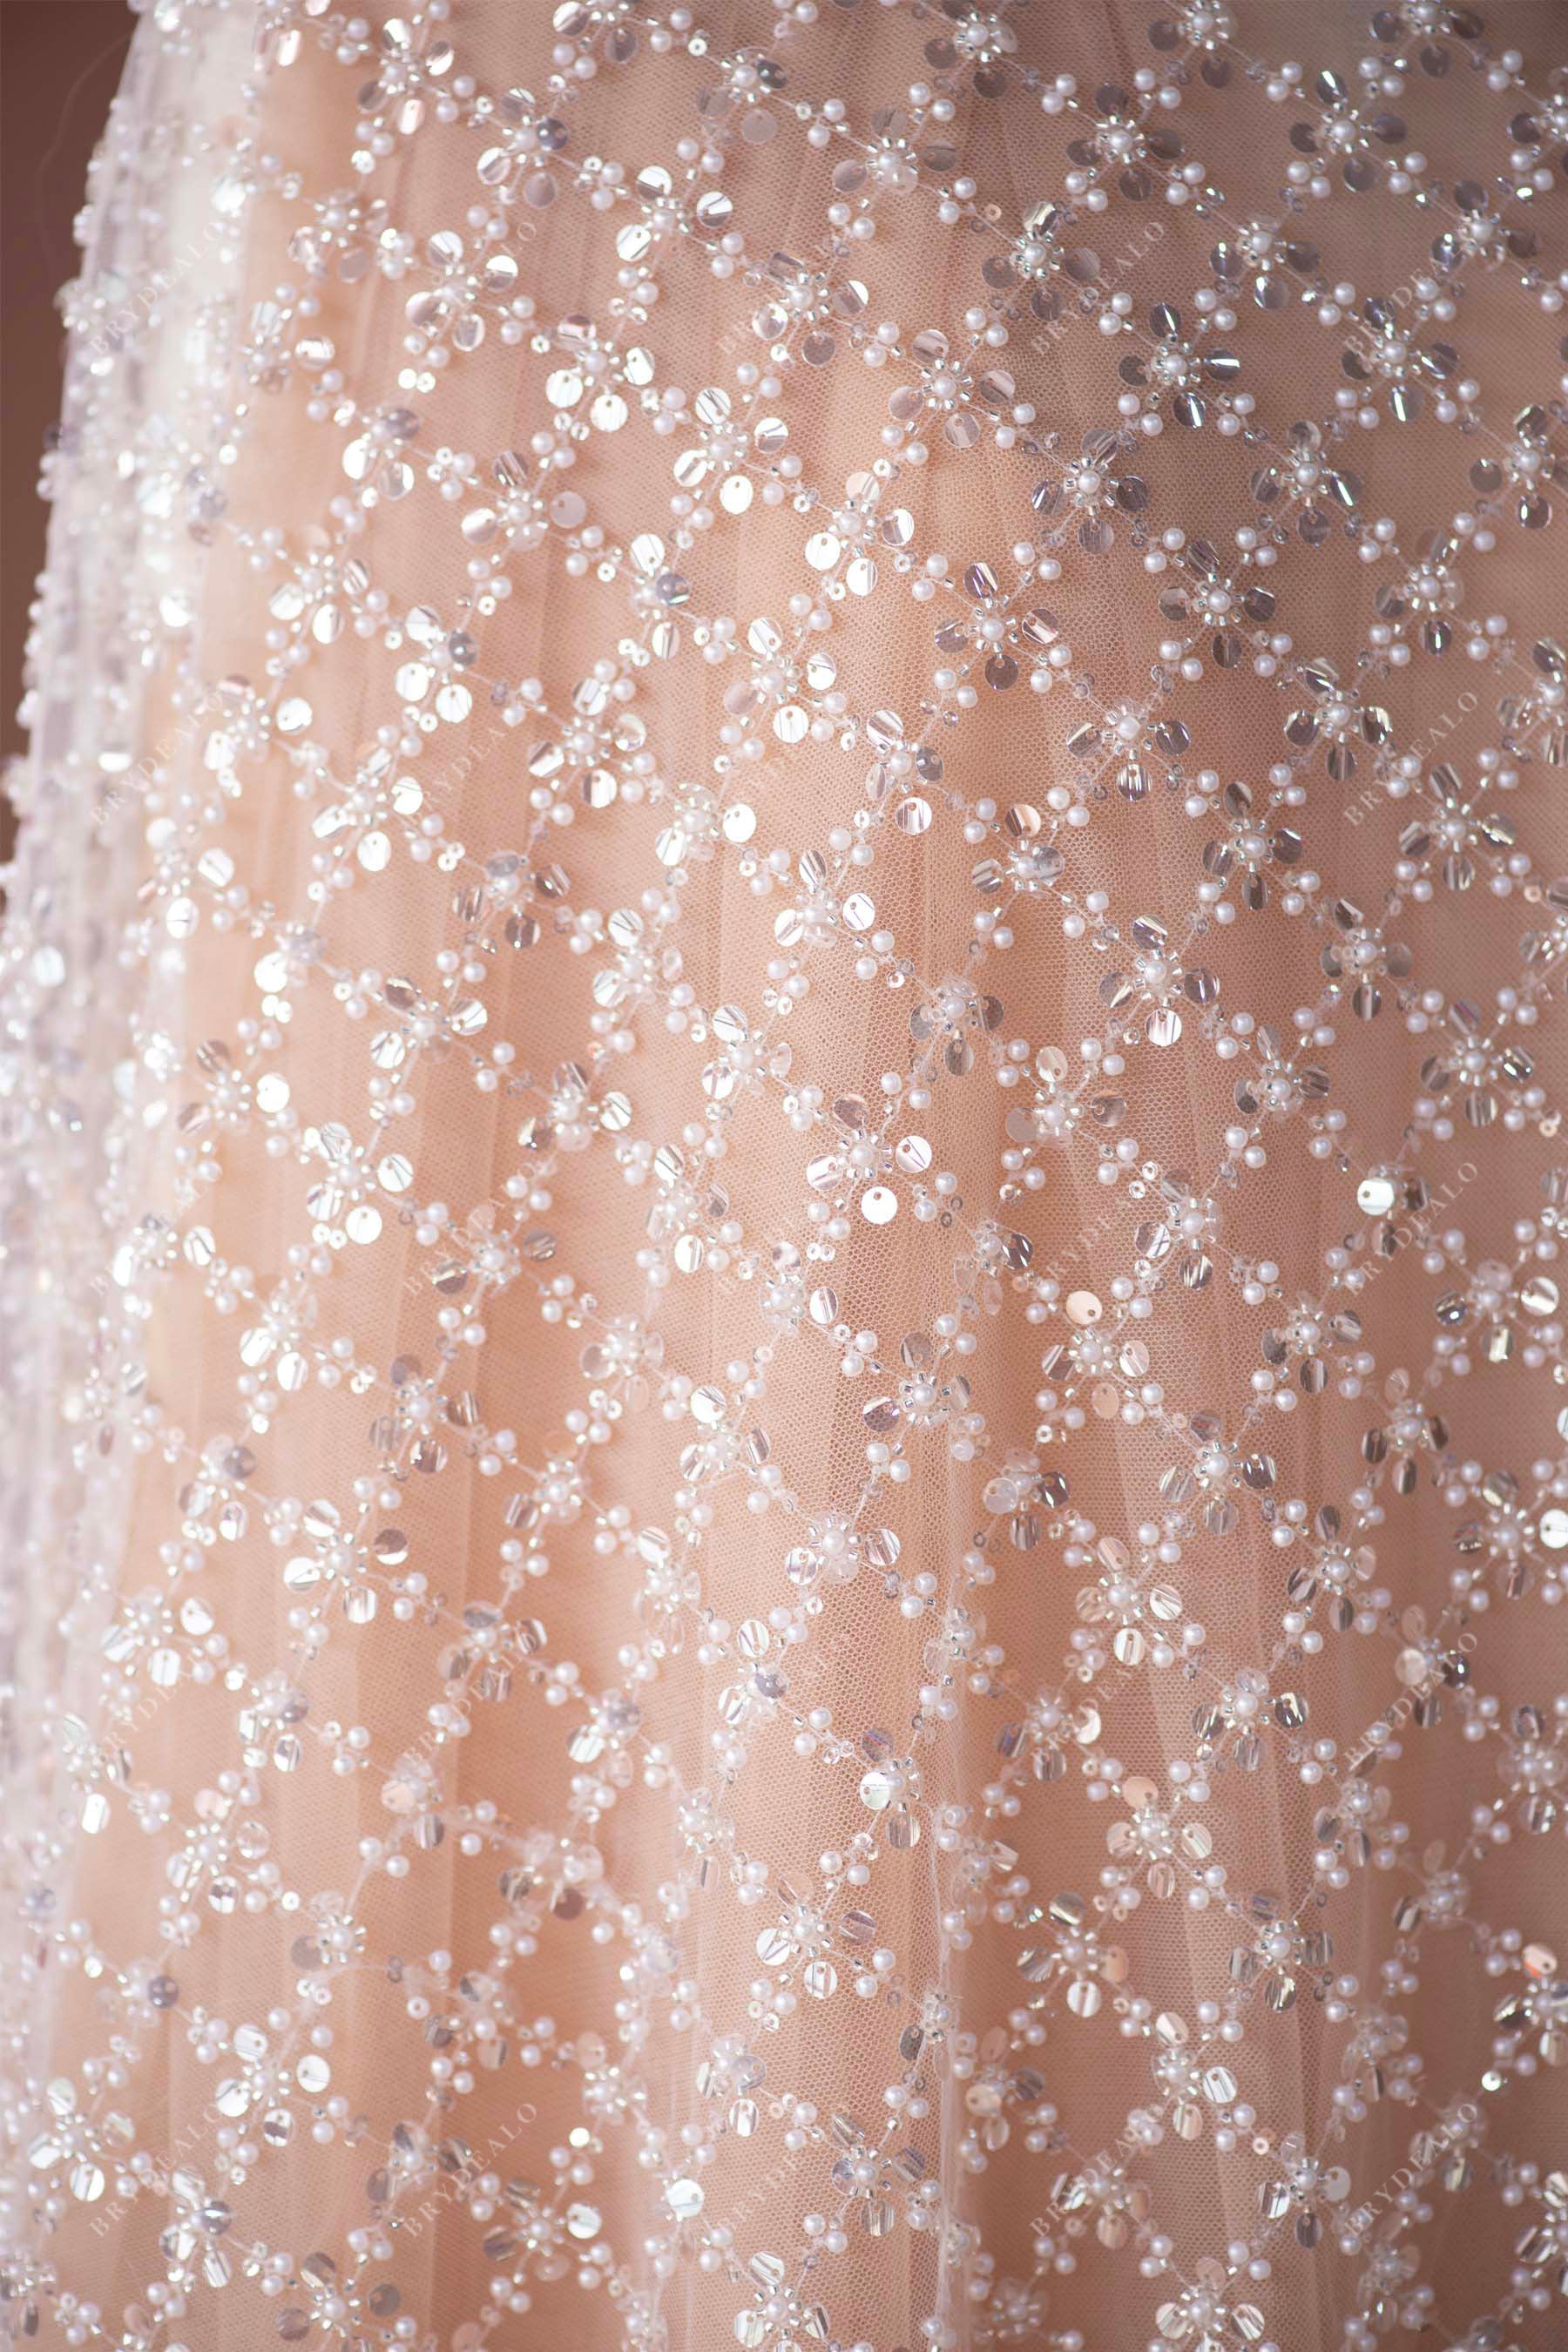 rhombus designer sparkly lace fabric for wedding dress